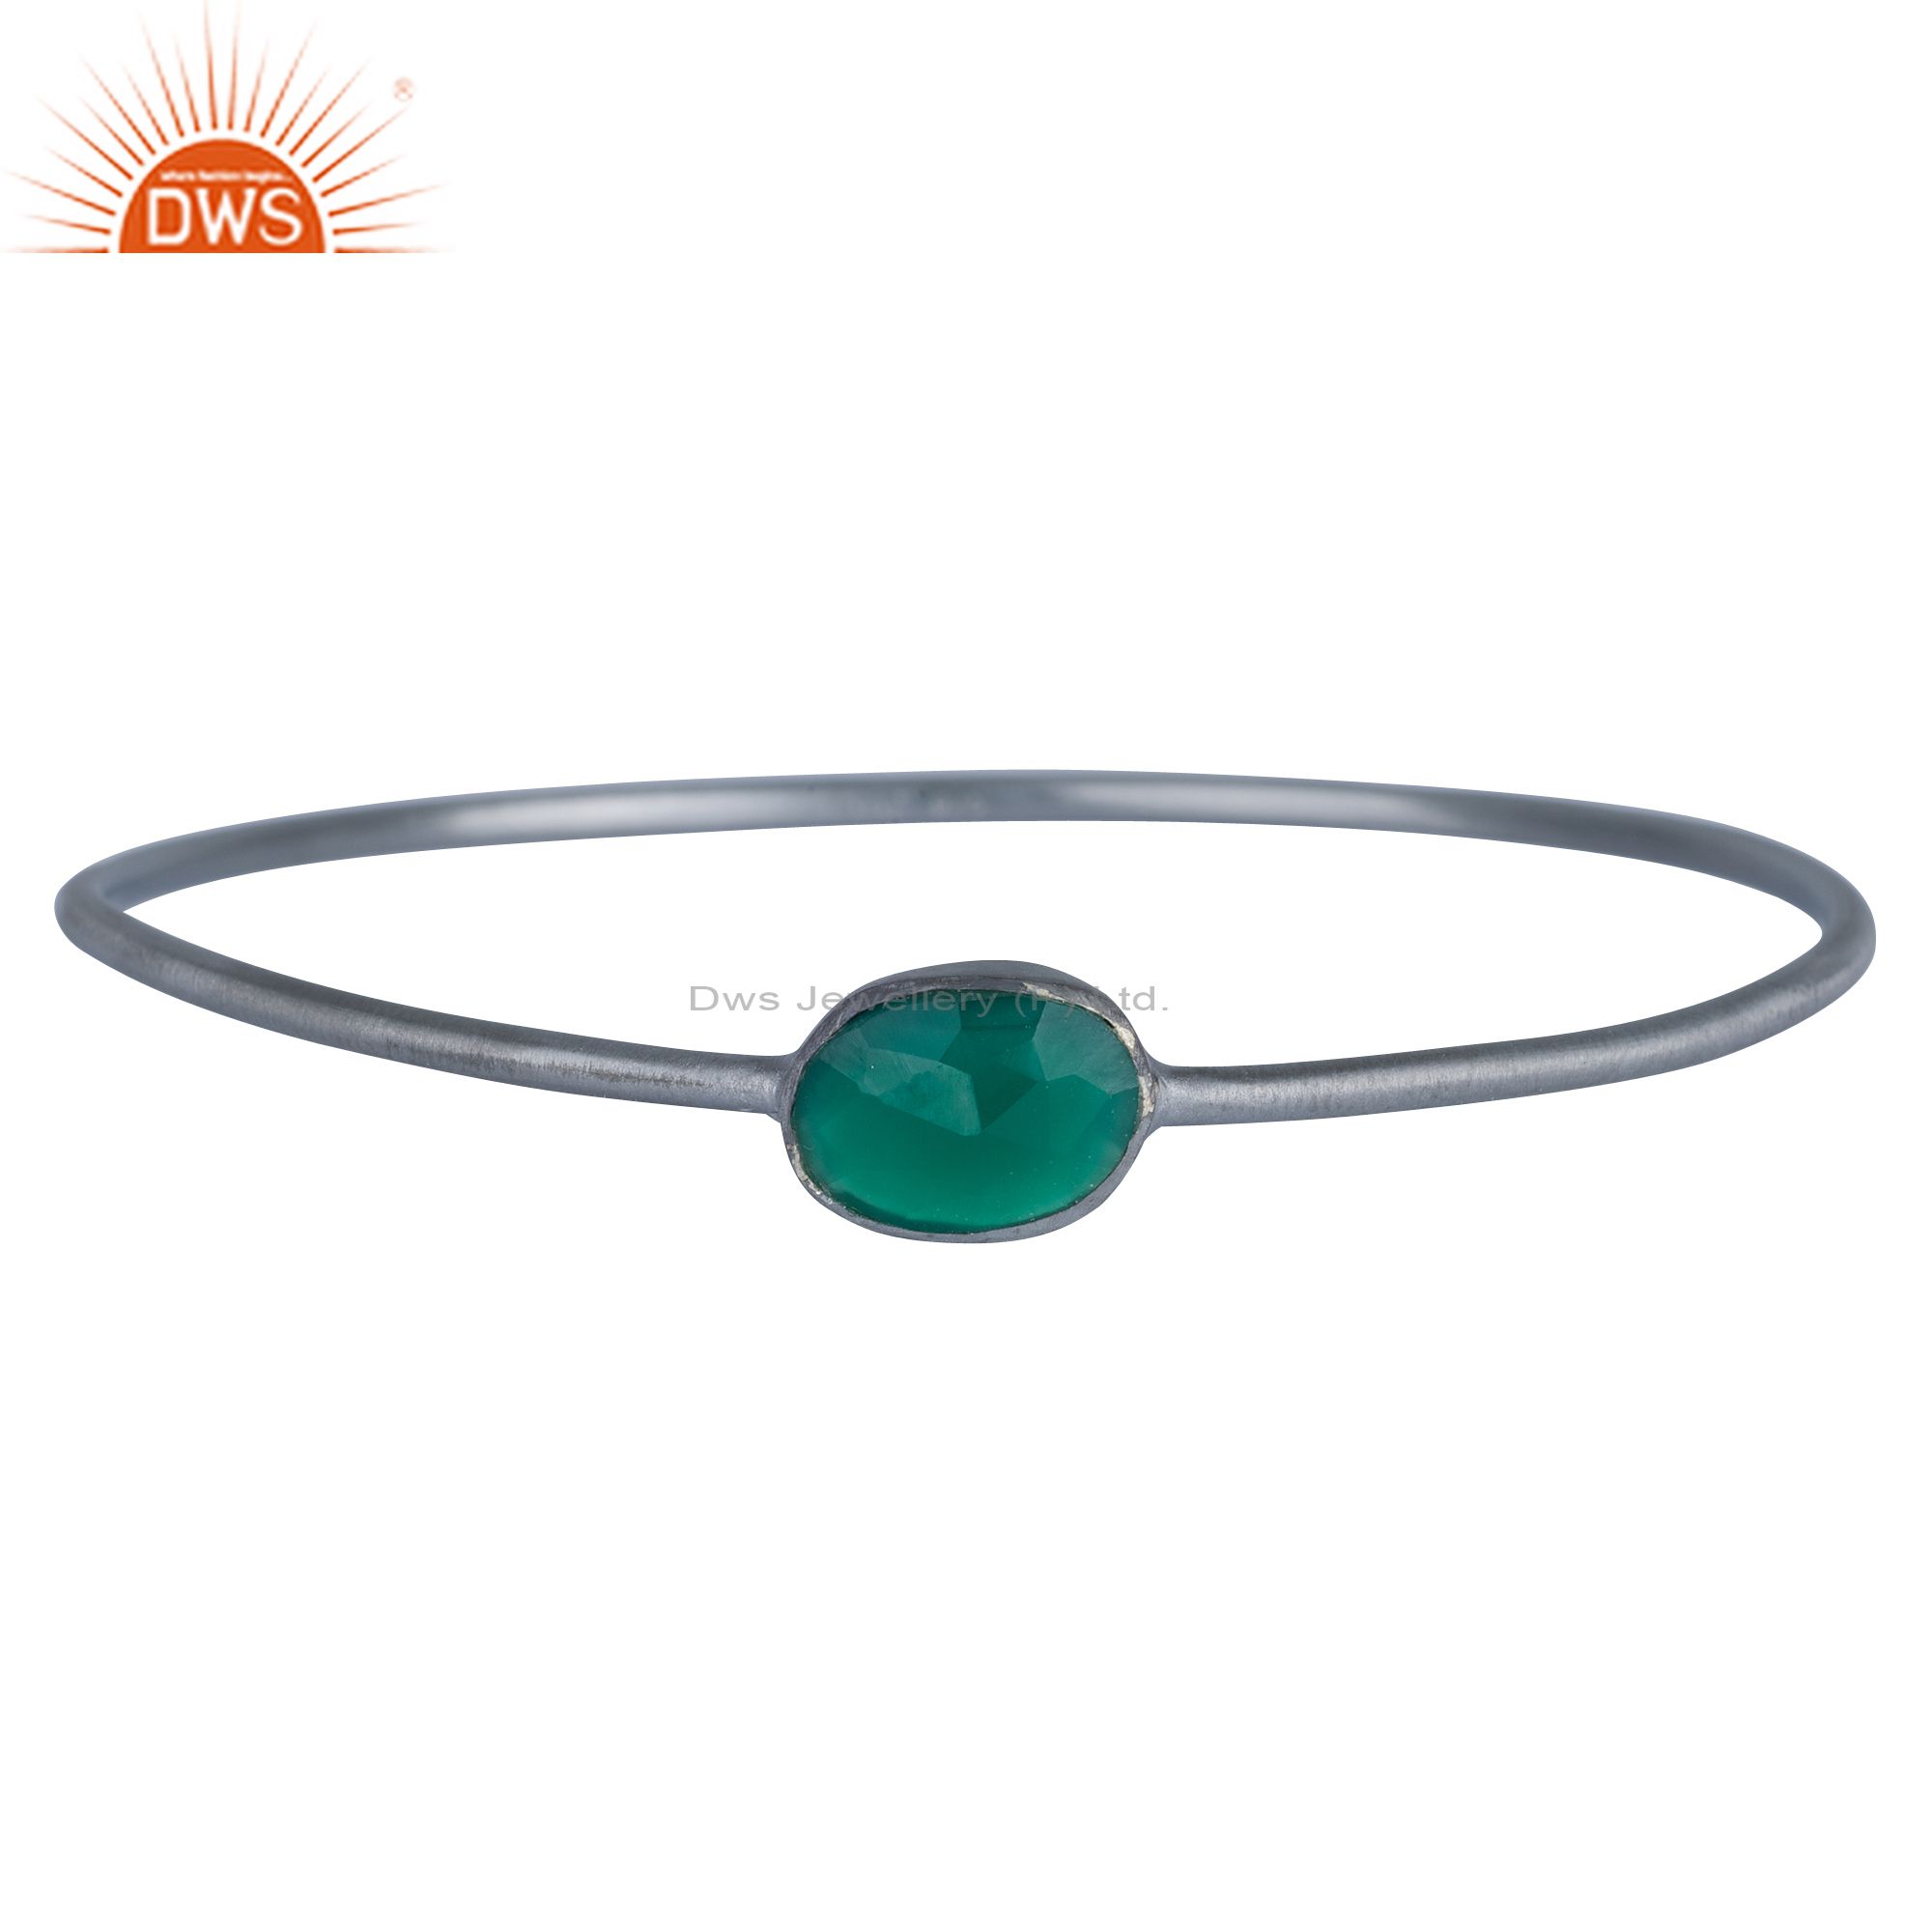 Handmade 925 silveroxidized green onyx gemstone stackable bangle